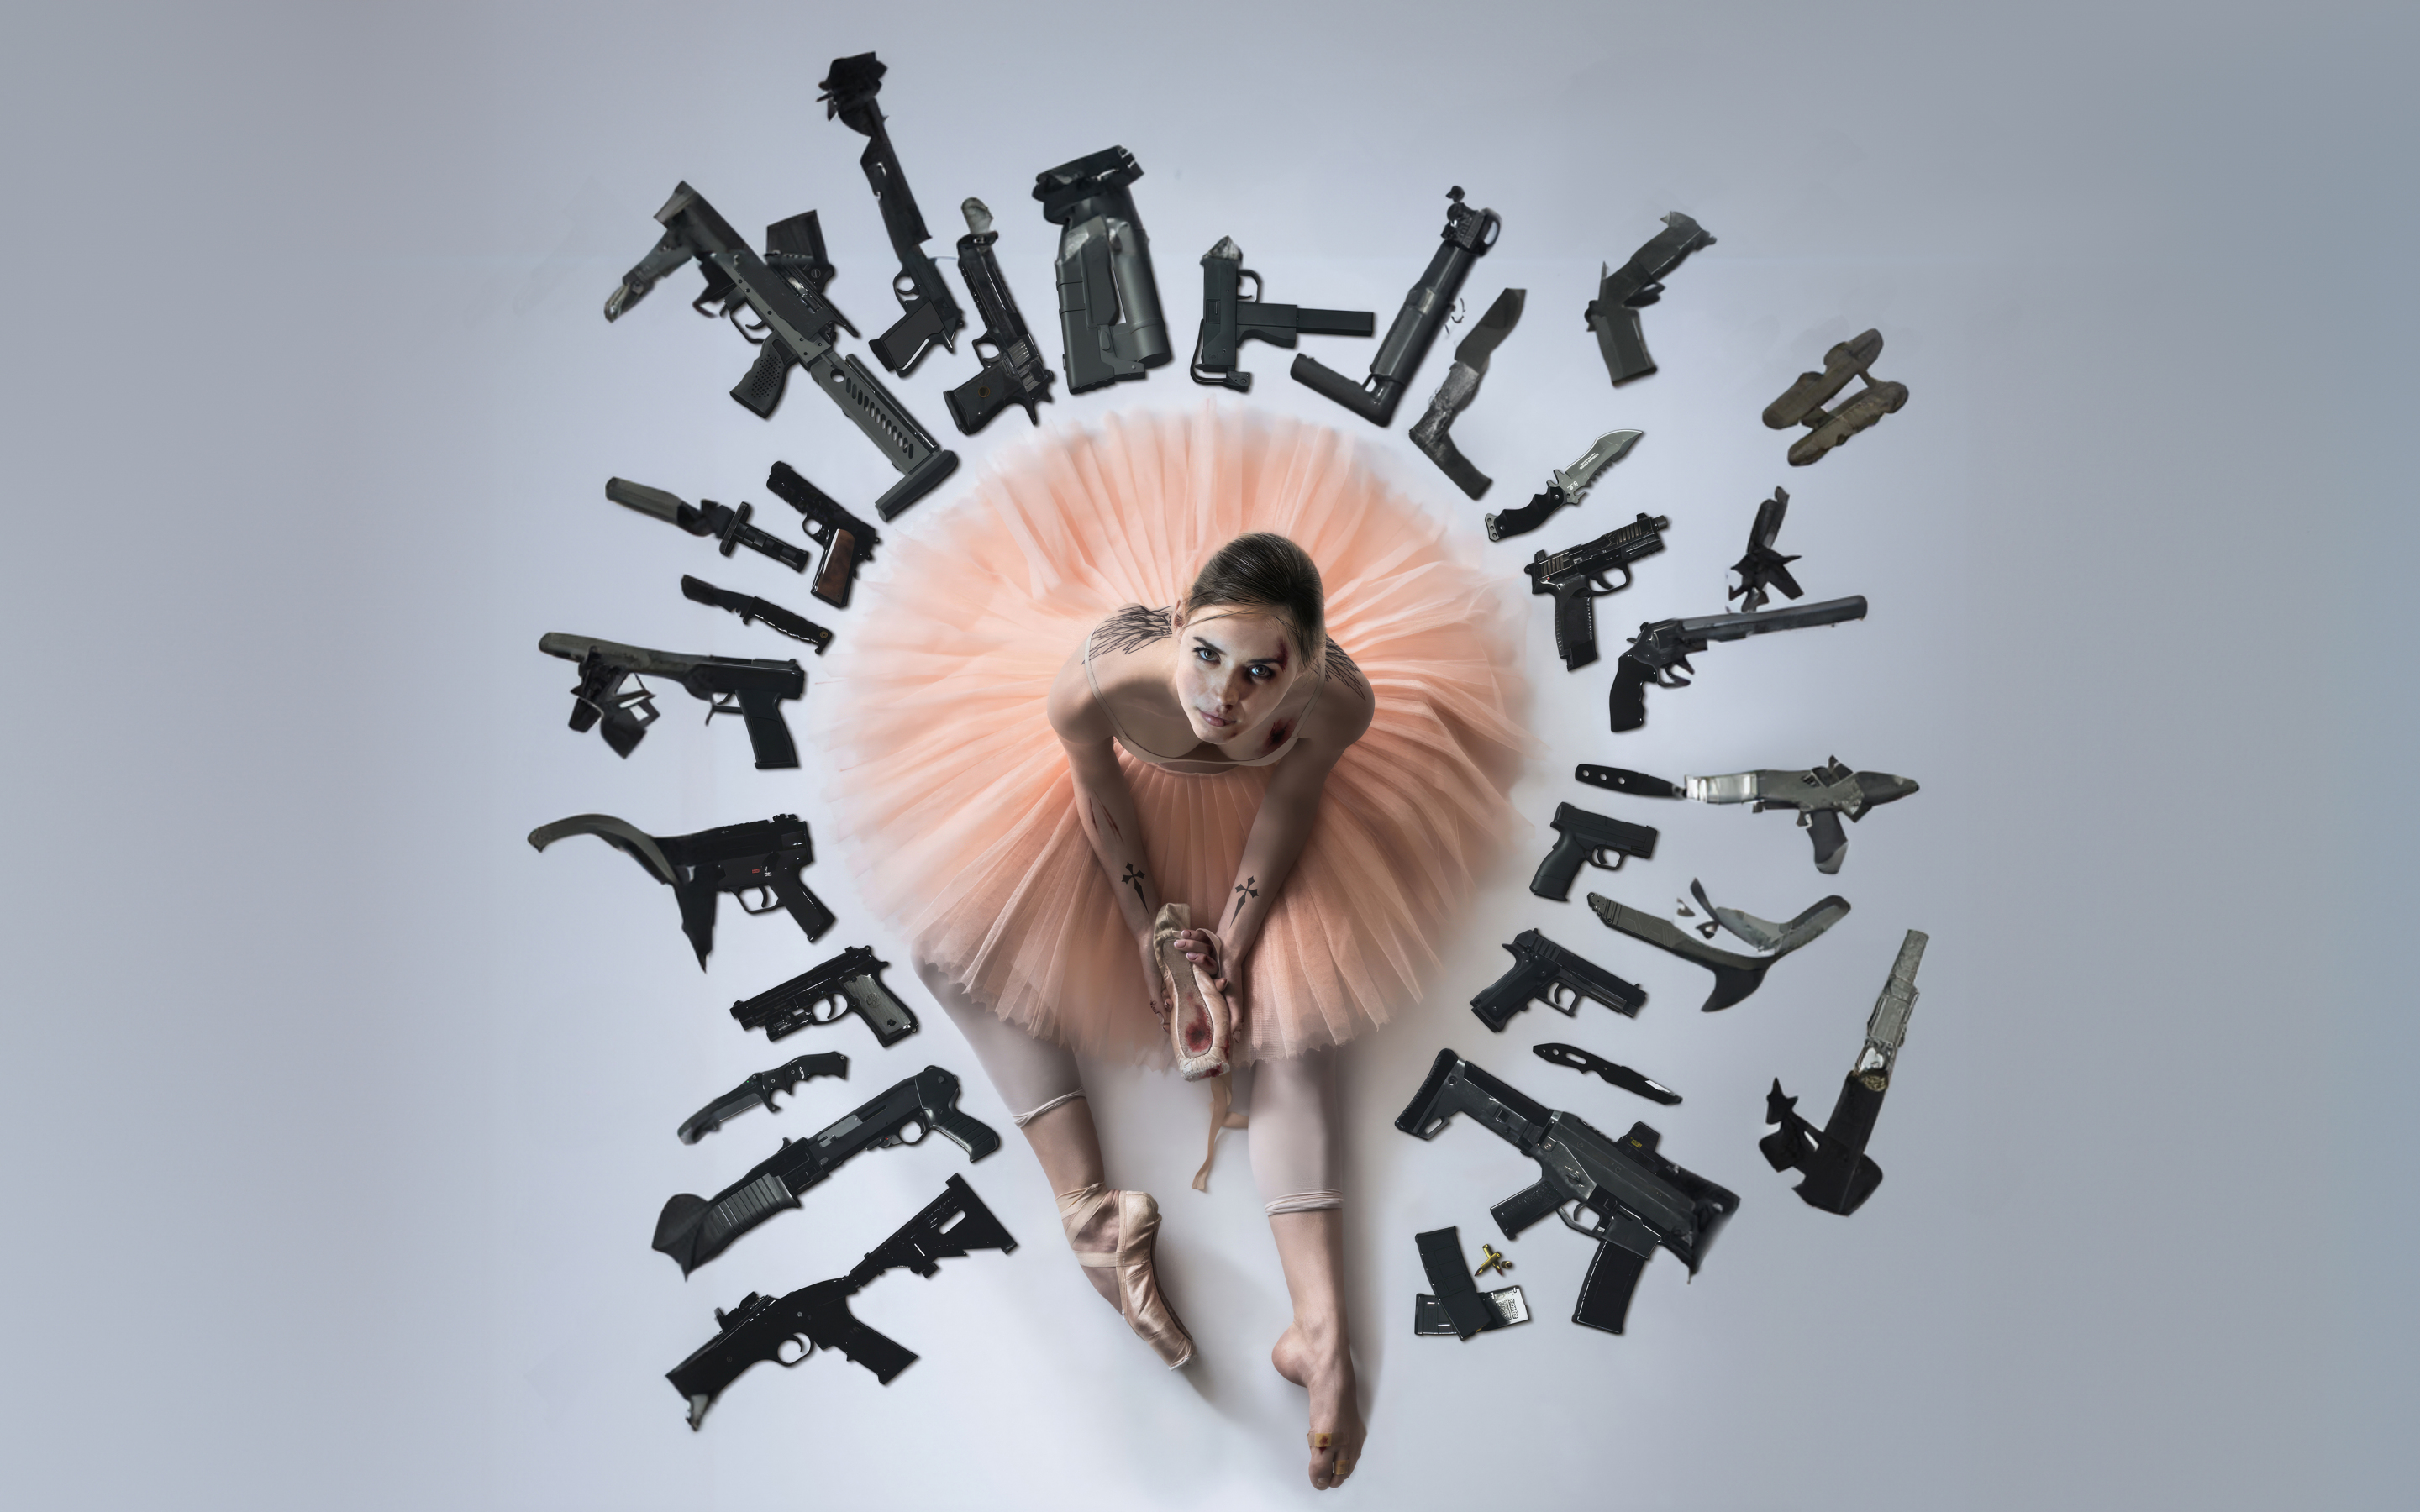 Ballerina, 2024 movie, gun and dance, 2880x1800 wallpaper